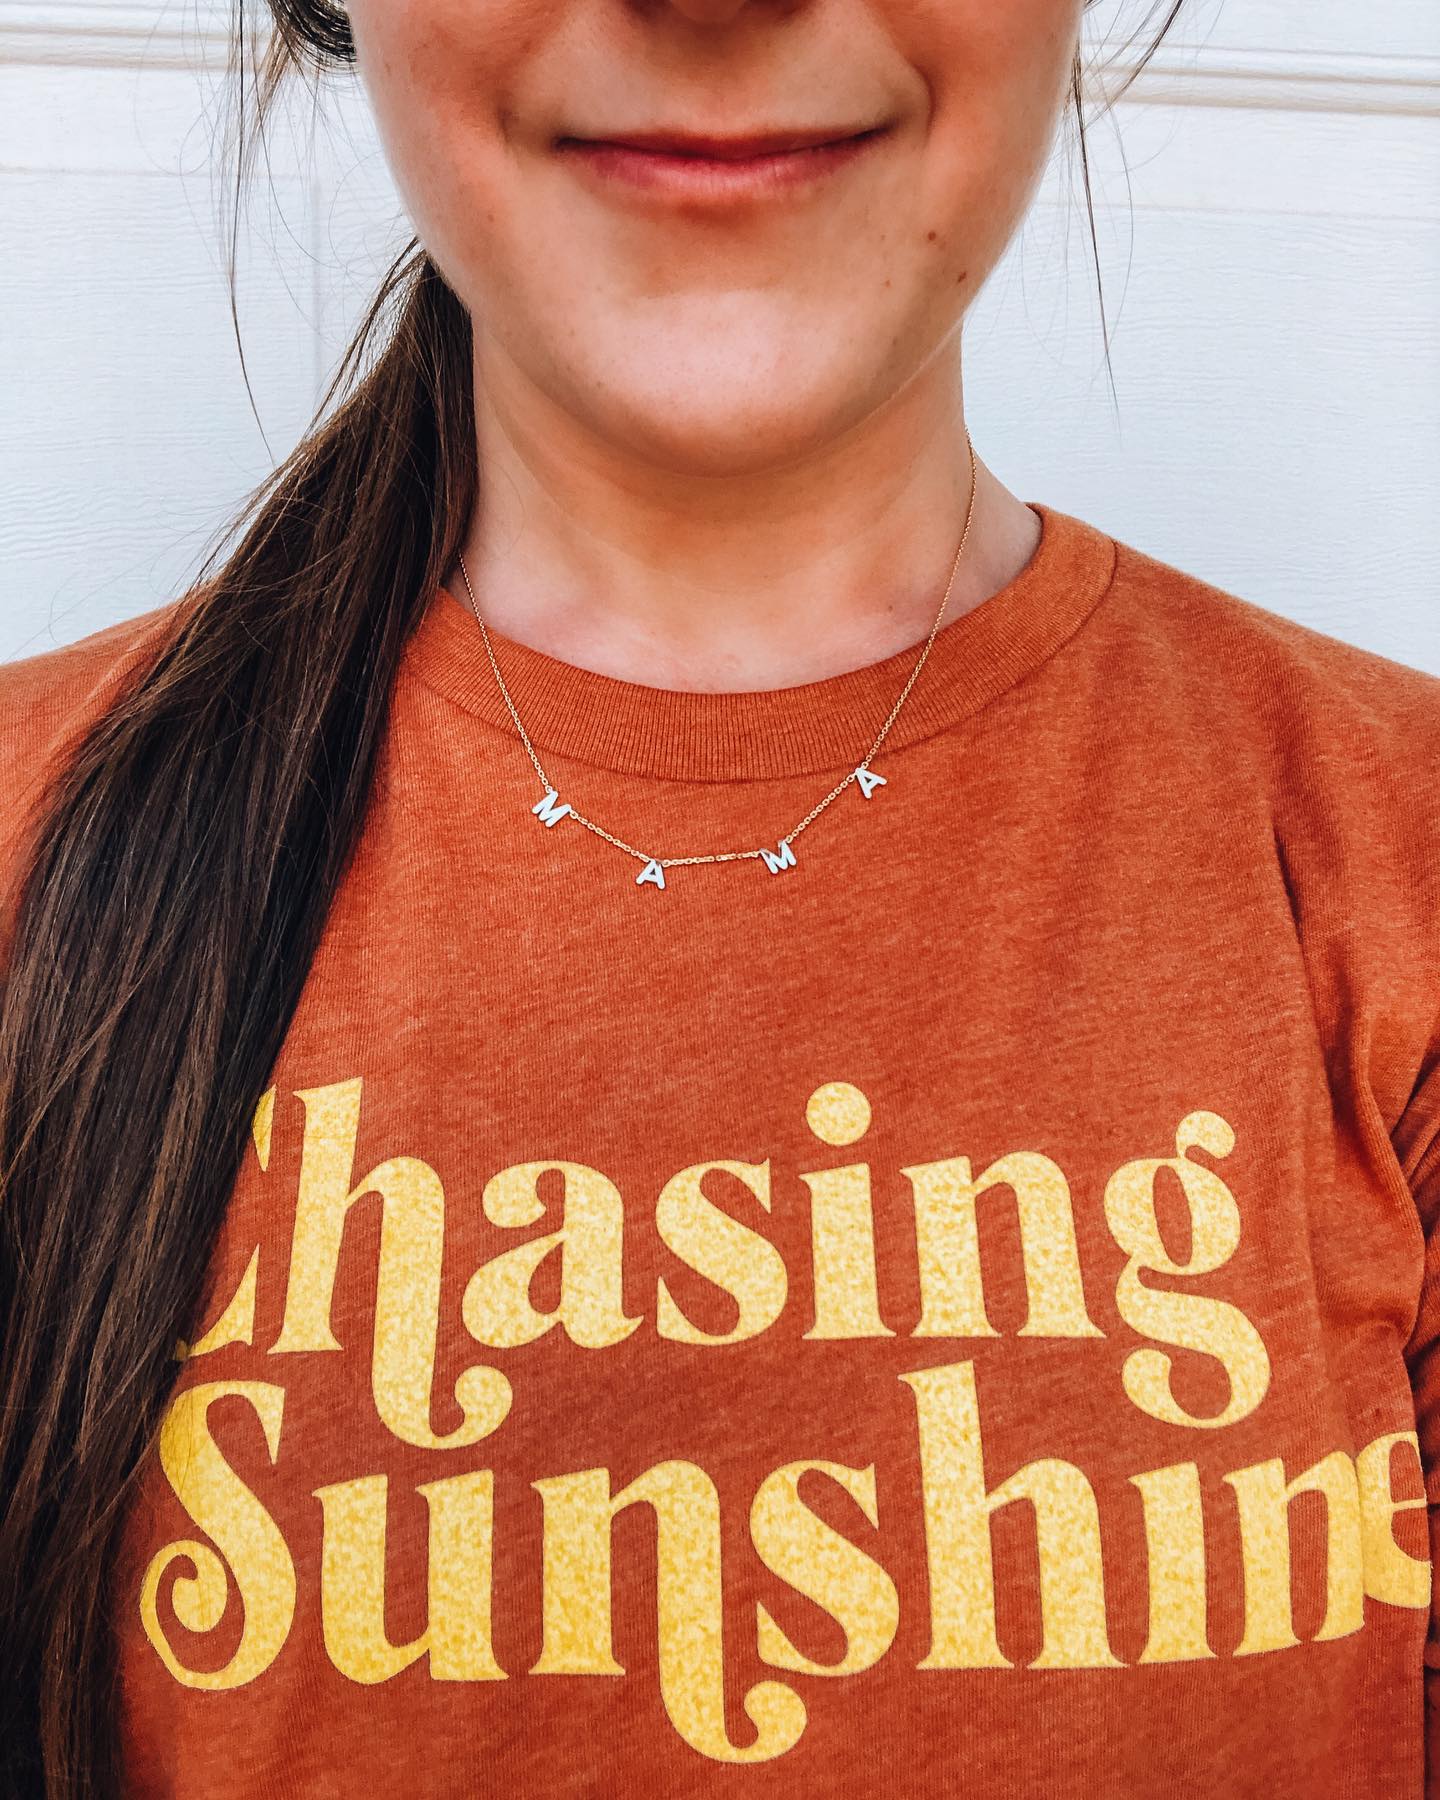 Chasing Sunshine - July 2020 MISPRINTS